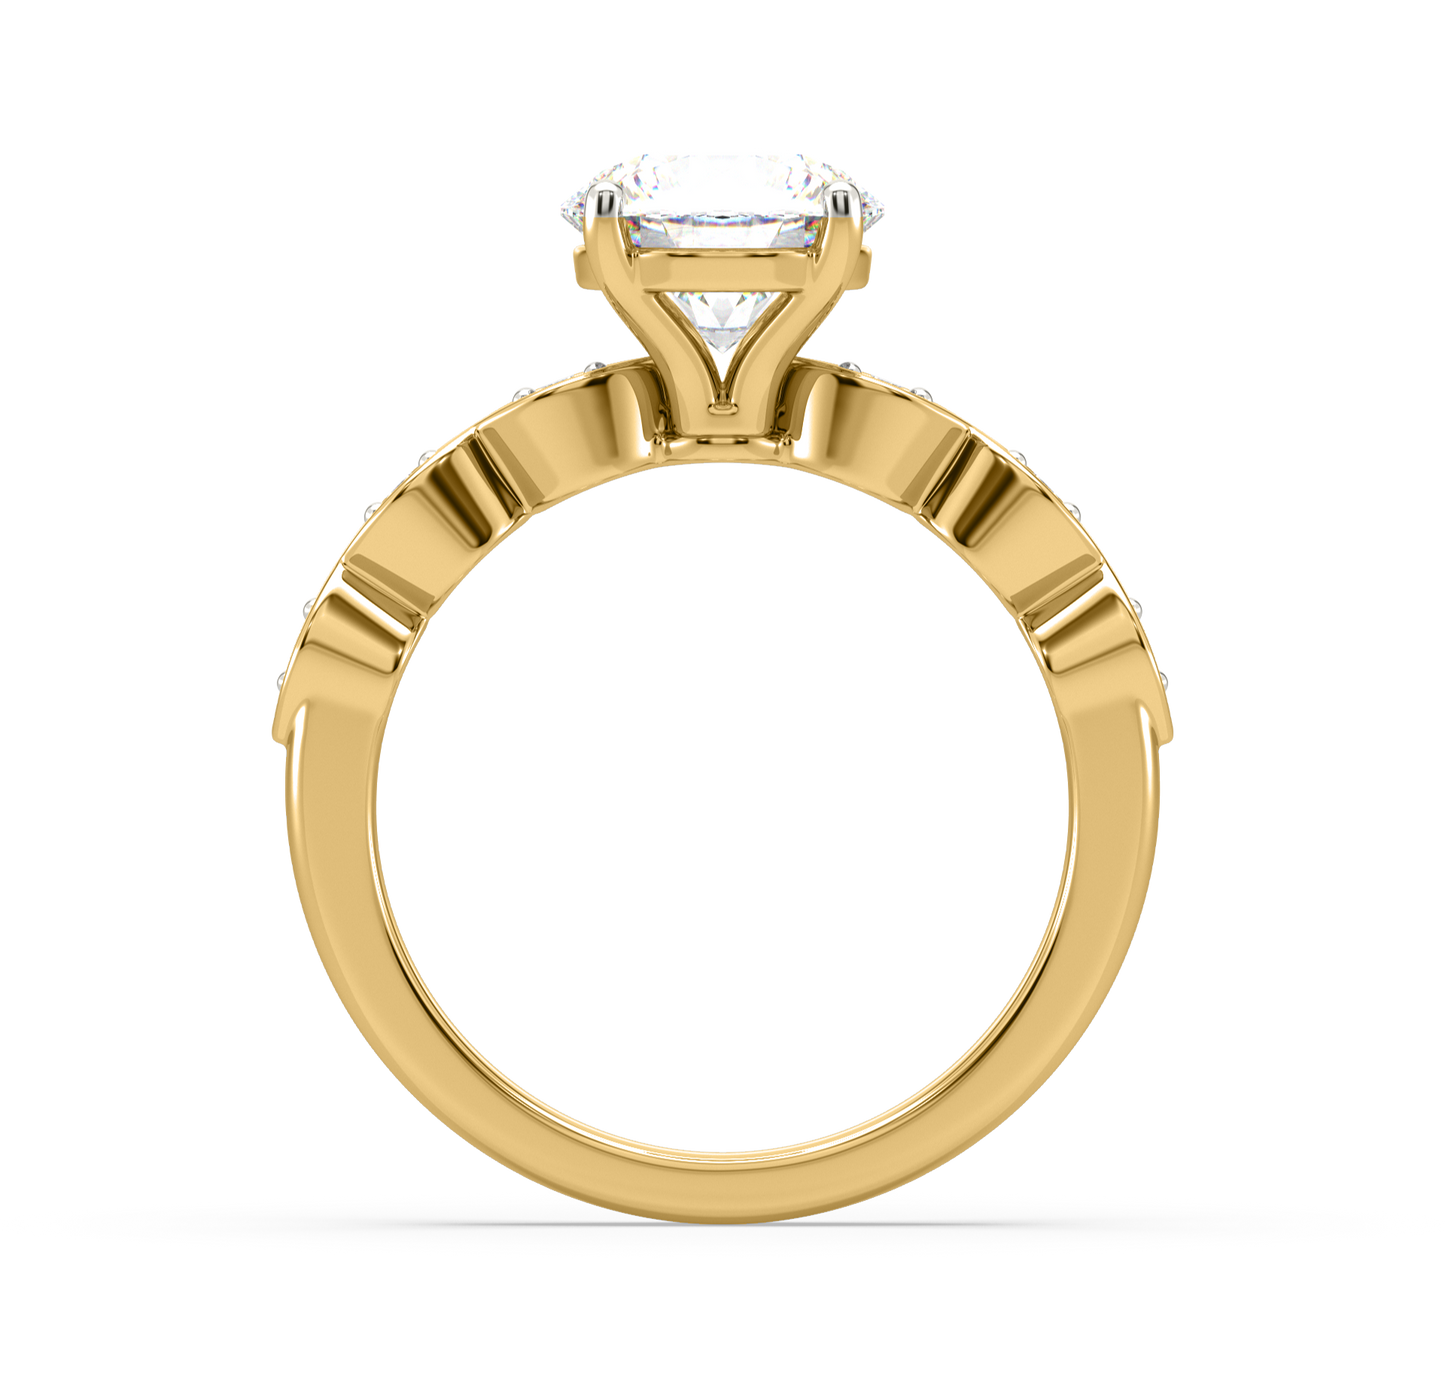 Customised ring RG21015-PH21048